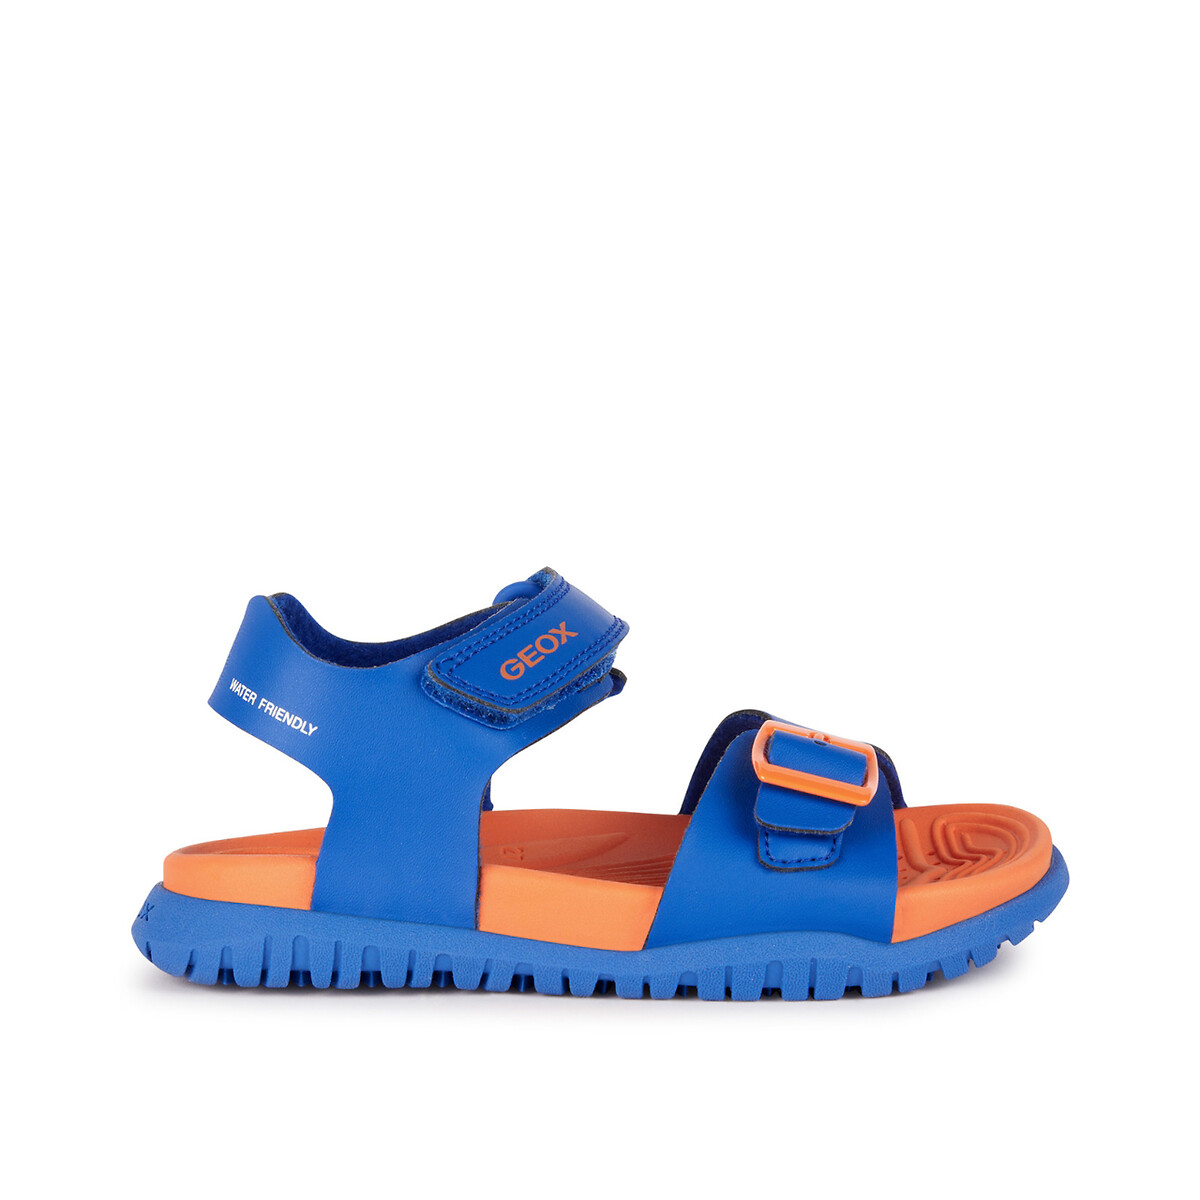 Fommiex åndbare sandaler børn touch tæt lukning kongeblå Geox | La Redoute